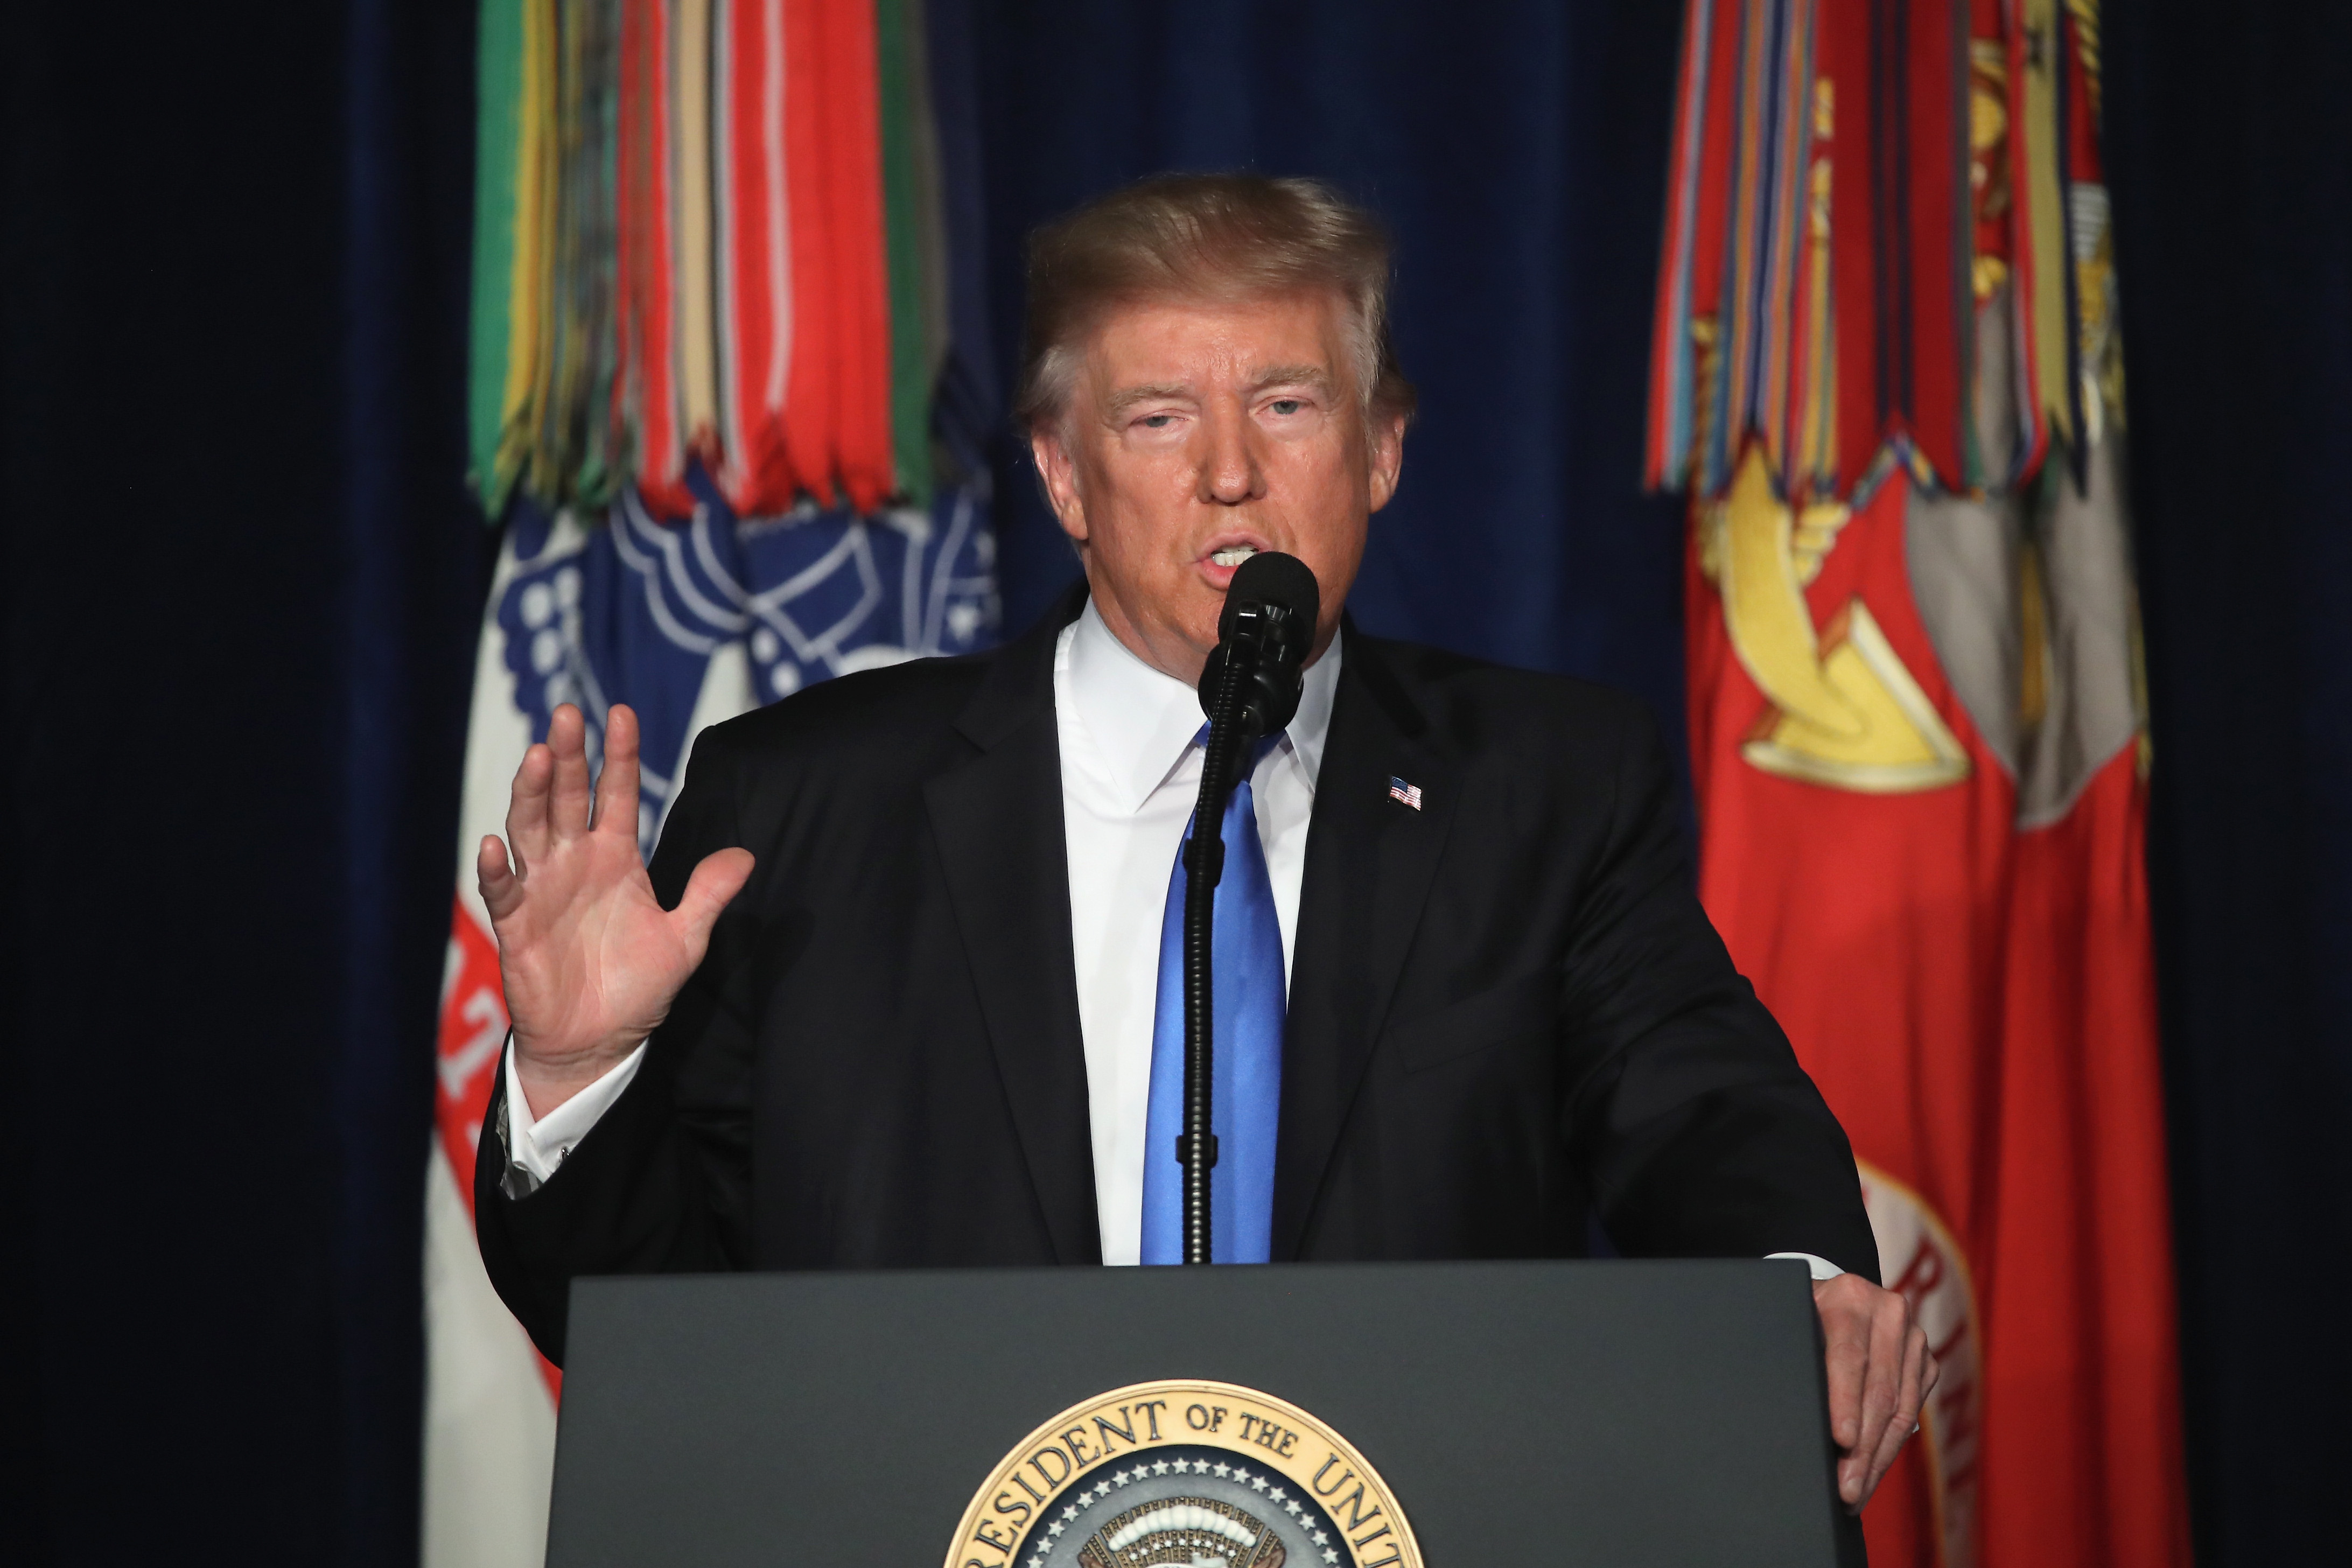 President Trump speaks about Afghanistan